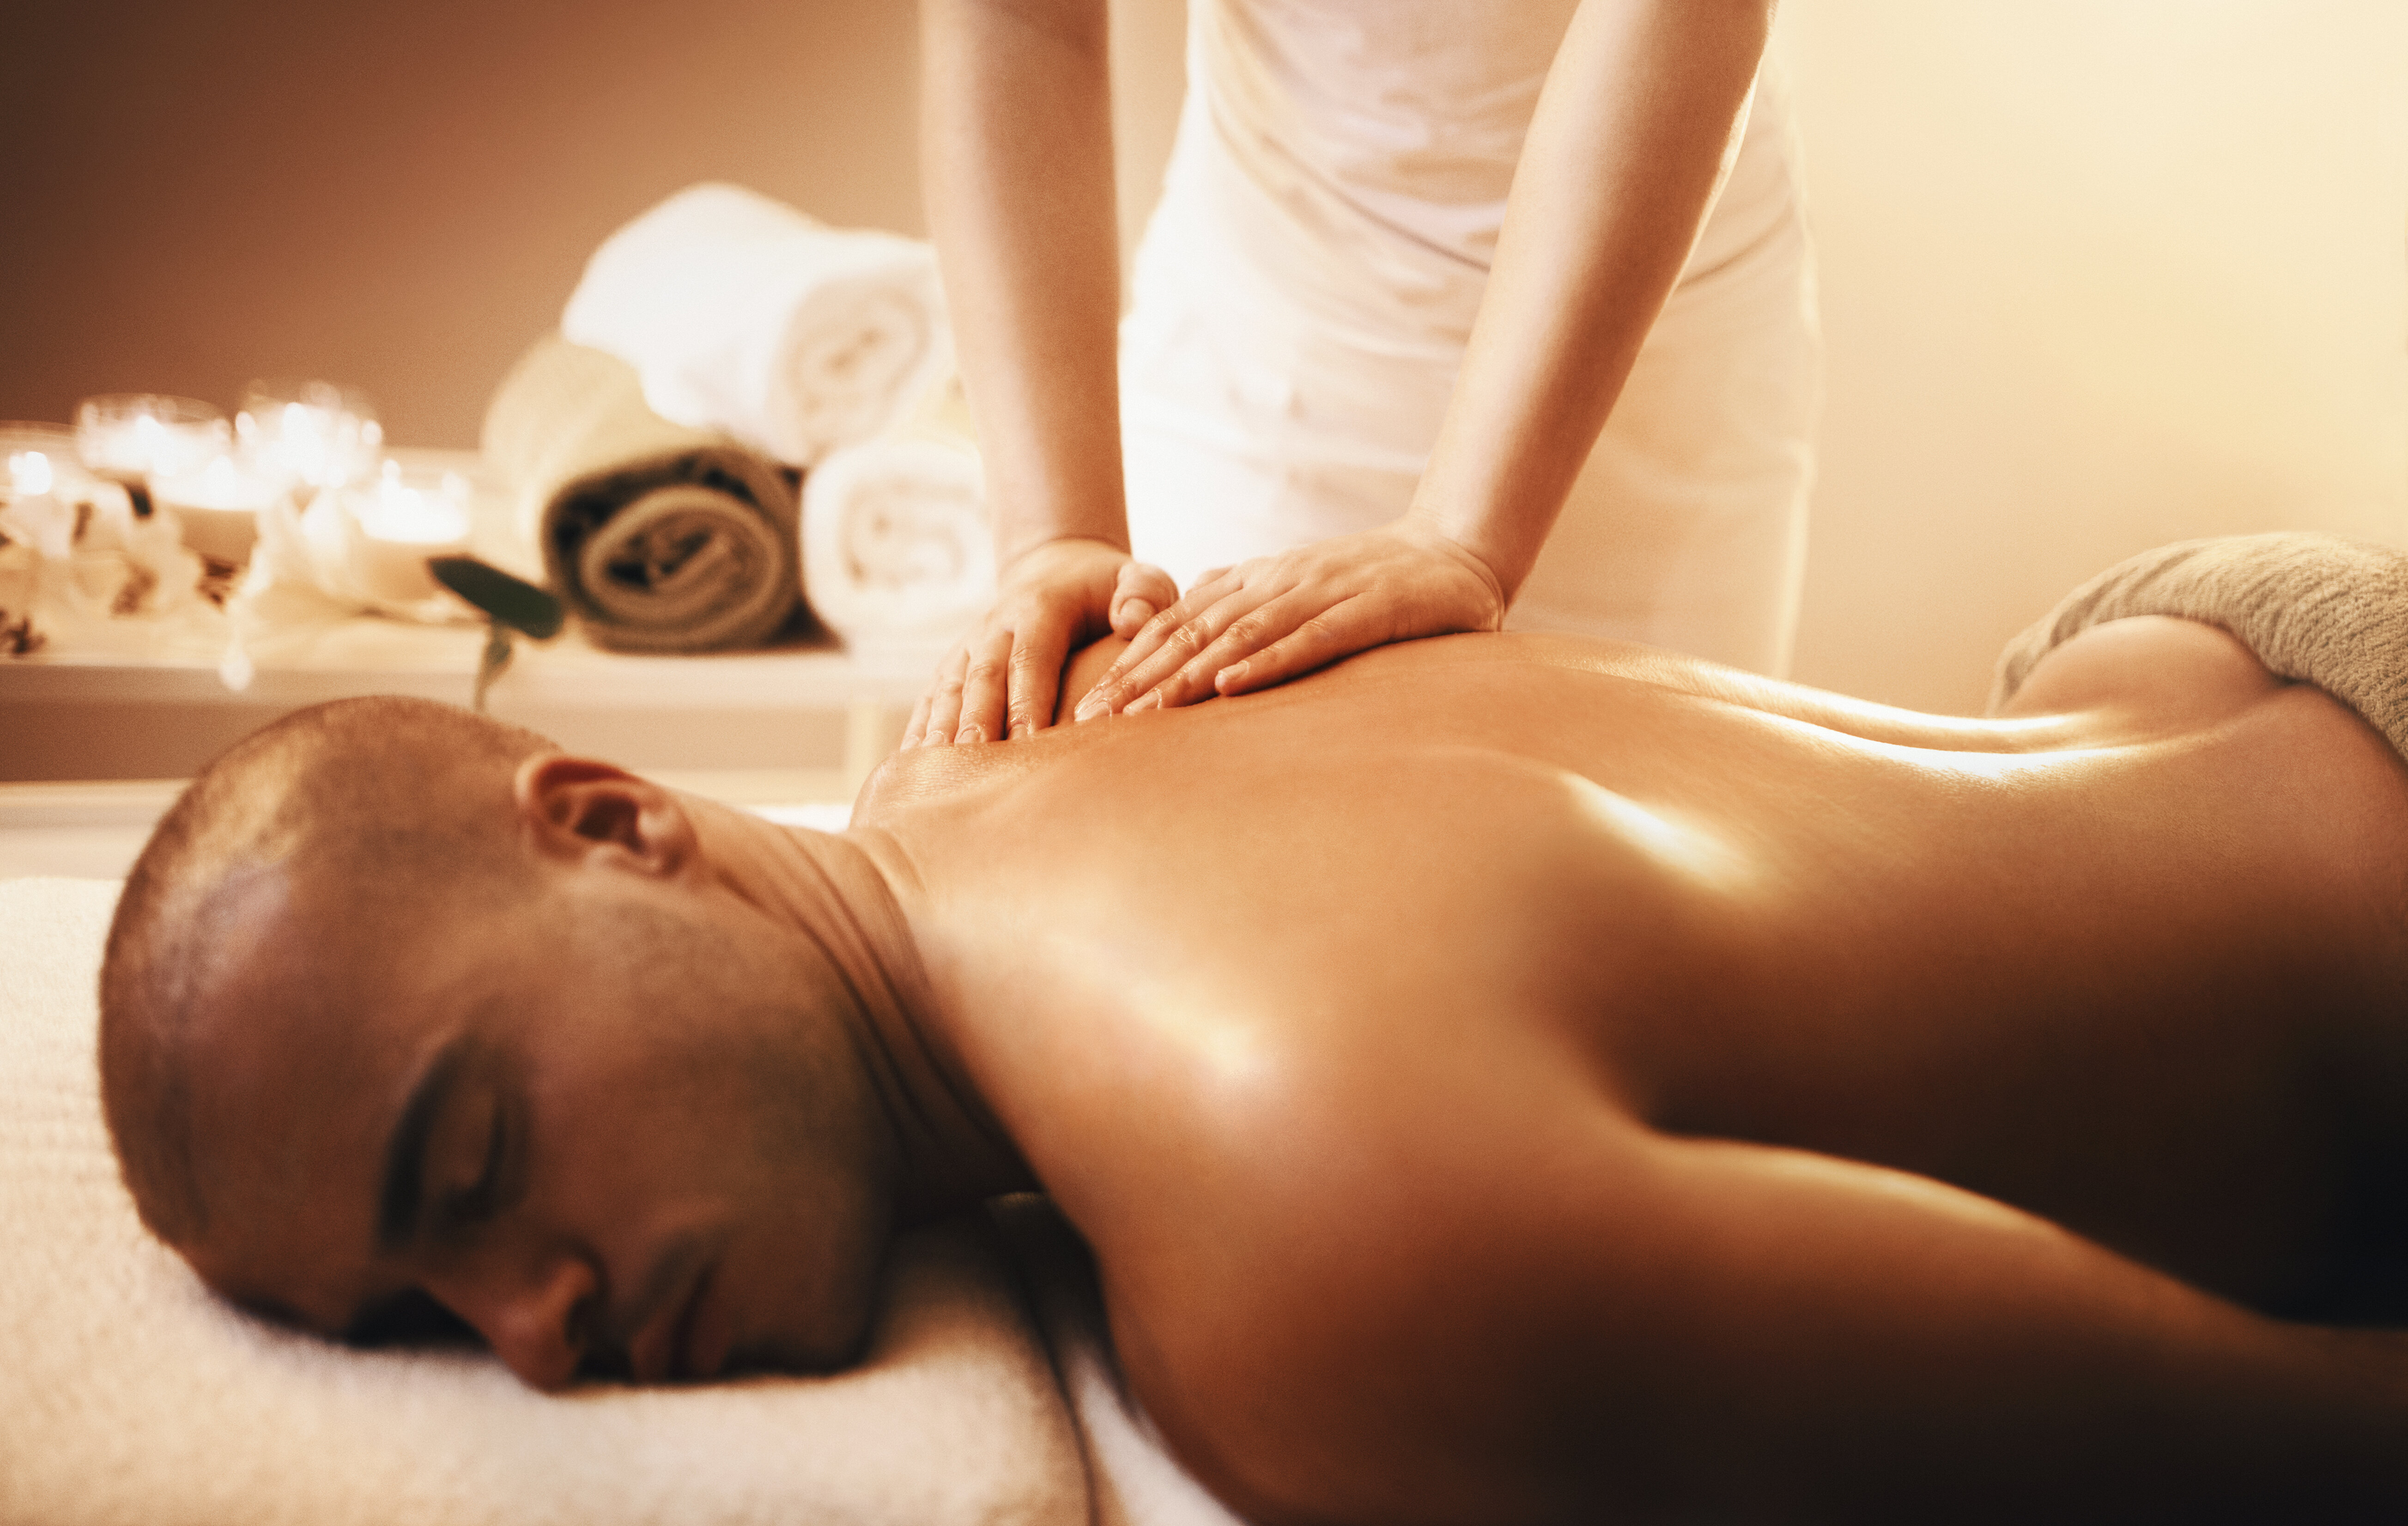 Hot massage video. Массаж релаксирующий для мужчин. Спа массаж для мужчин. Релакс массаж для мужчин. Массаж картинки.